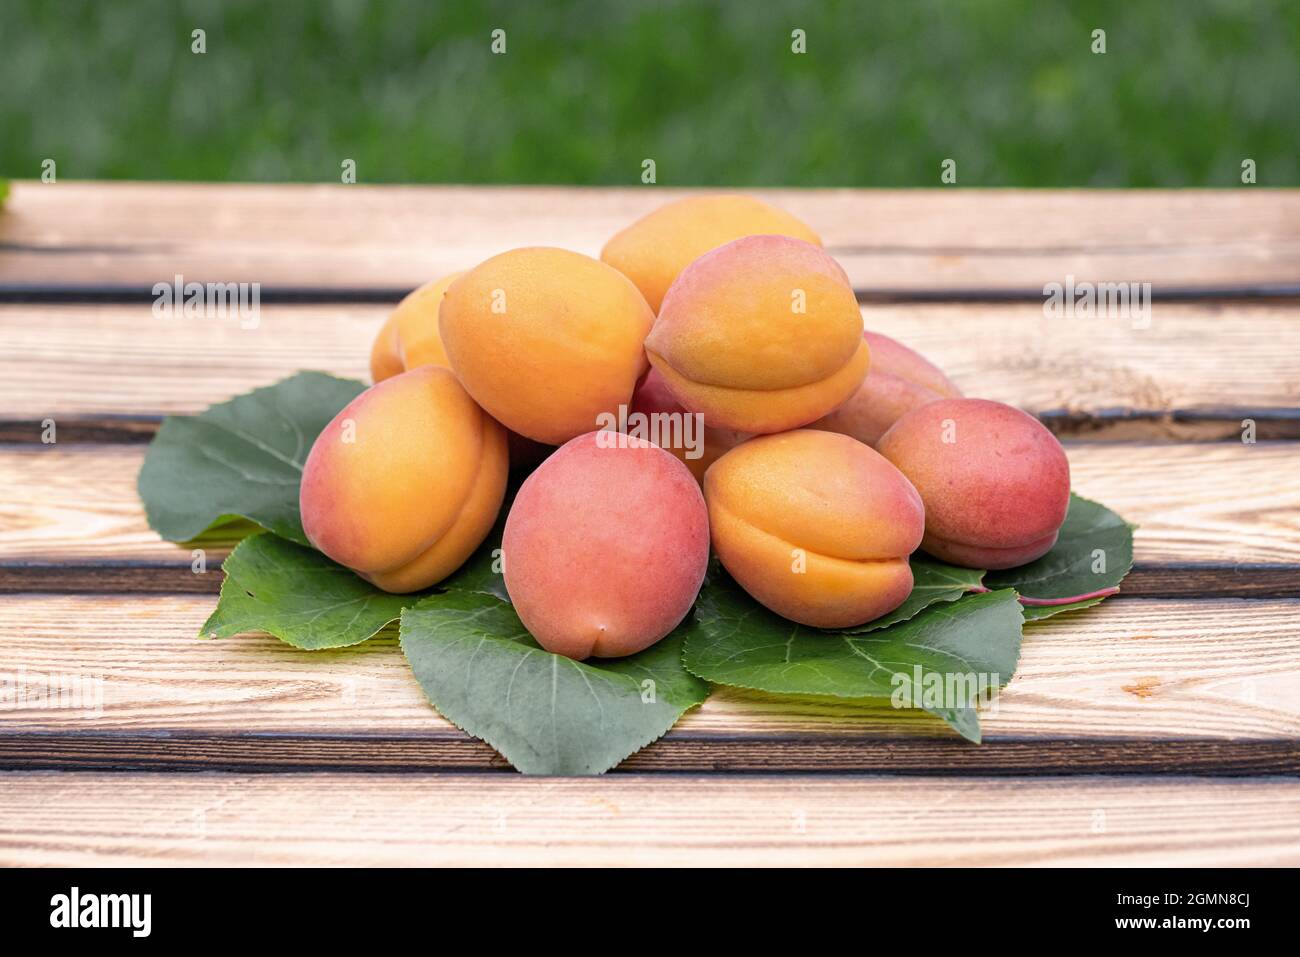 Abricot (Prunus armeniaca 'Farbaly', Prunus armeniaca Farbaly), abricot du cultivar Farbaly, Allemagne Banque D'Images